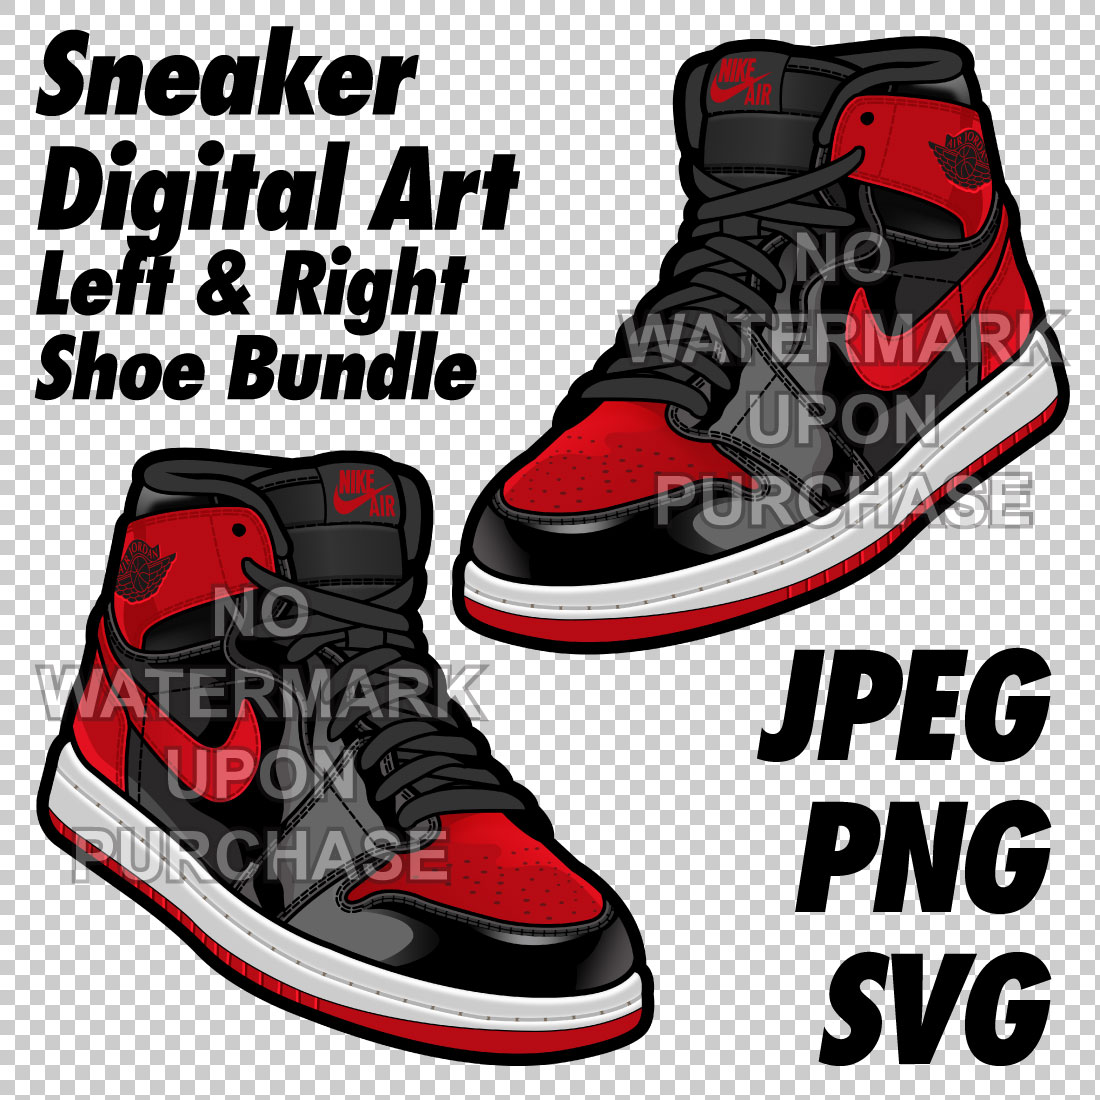 Air Jordan 1 Patent Bred JPEG PNG SVG right & left shoe bundle cover image.